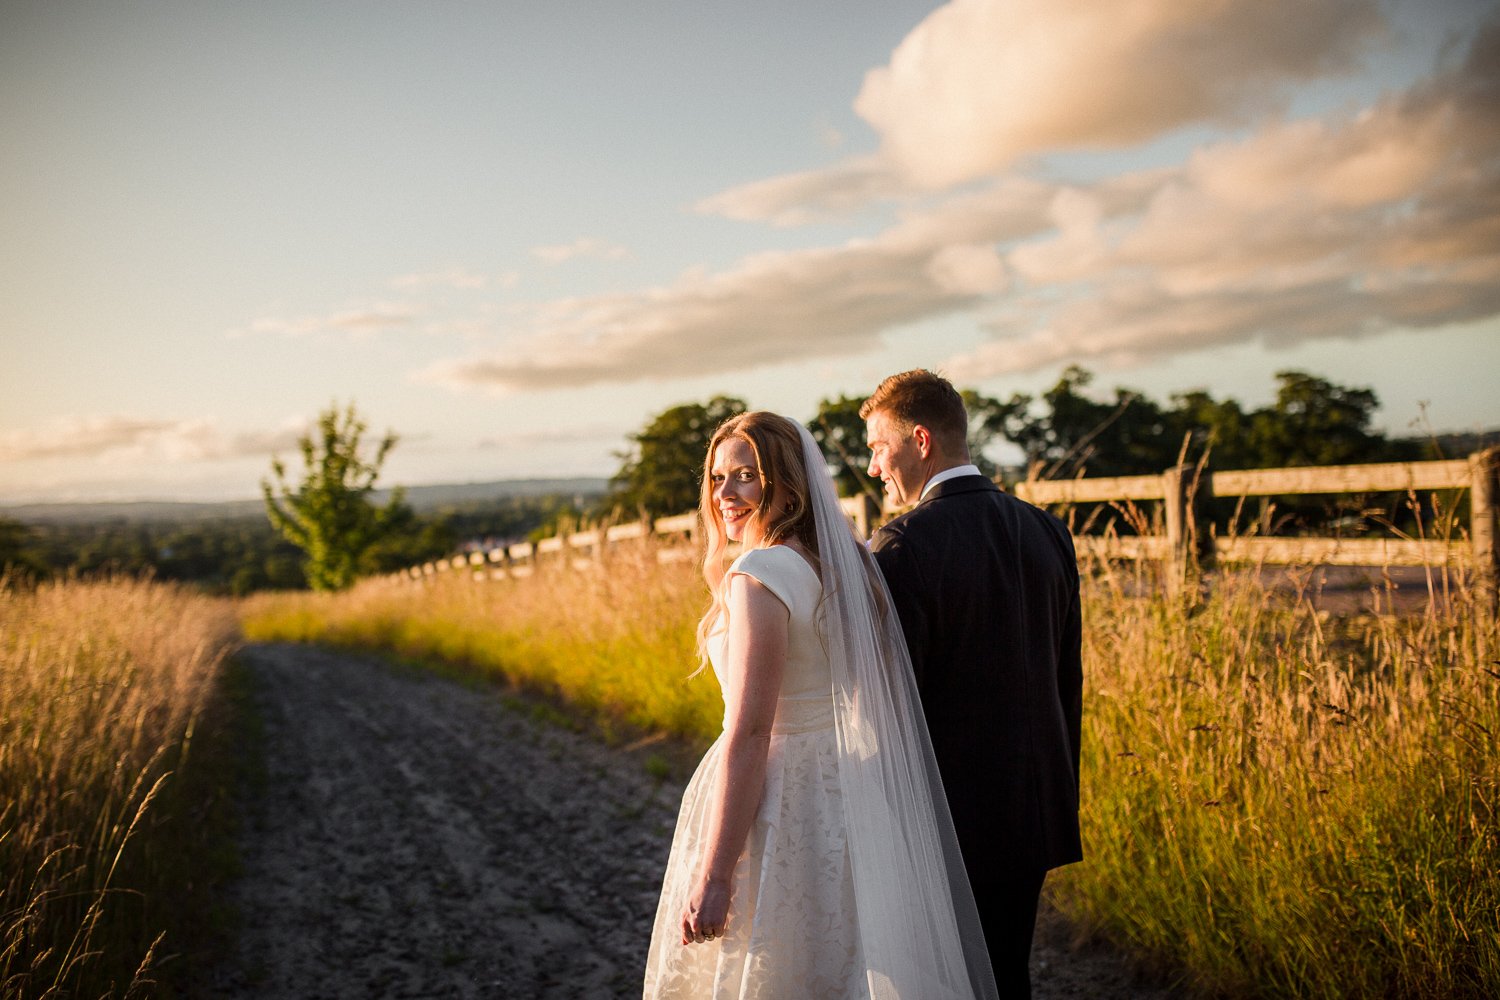 Upton Barn and Walled Garden Wedding Photography51.jpg